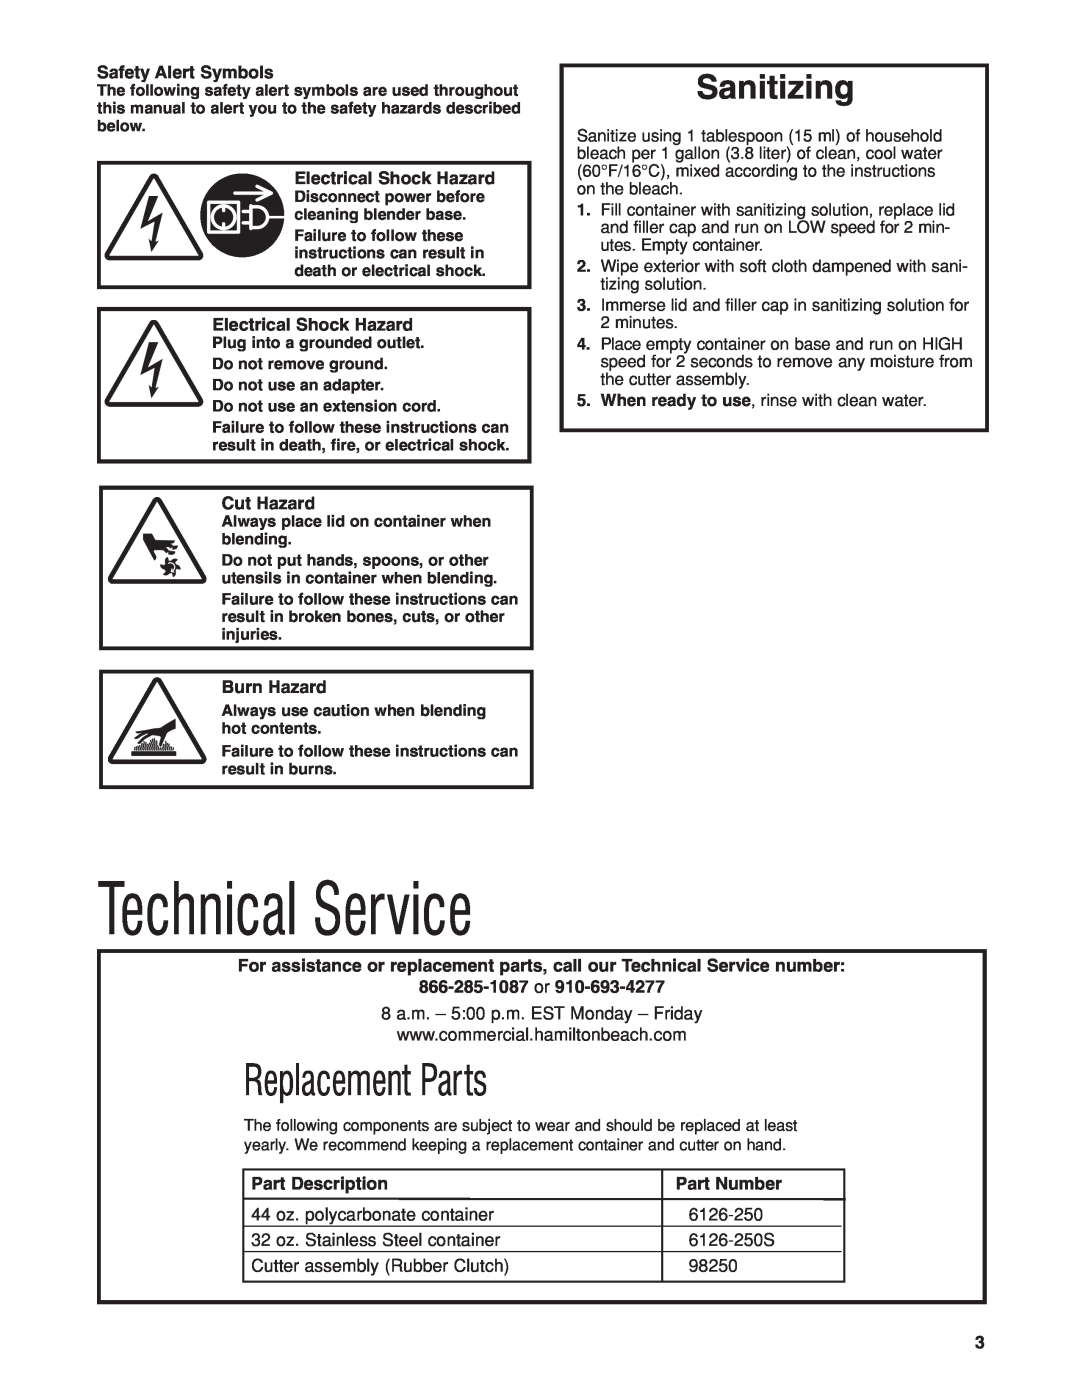 Hamilton Beach HBB250S Technical Service, Replacement Parts, Sanitizing, Safety Alert Symbols, Electrical Shock Hazard 